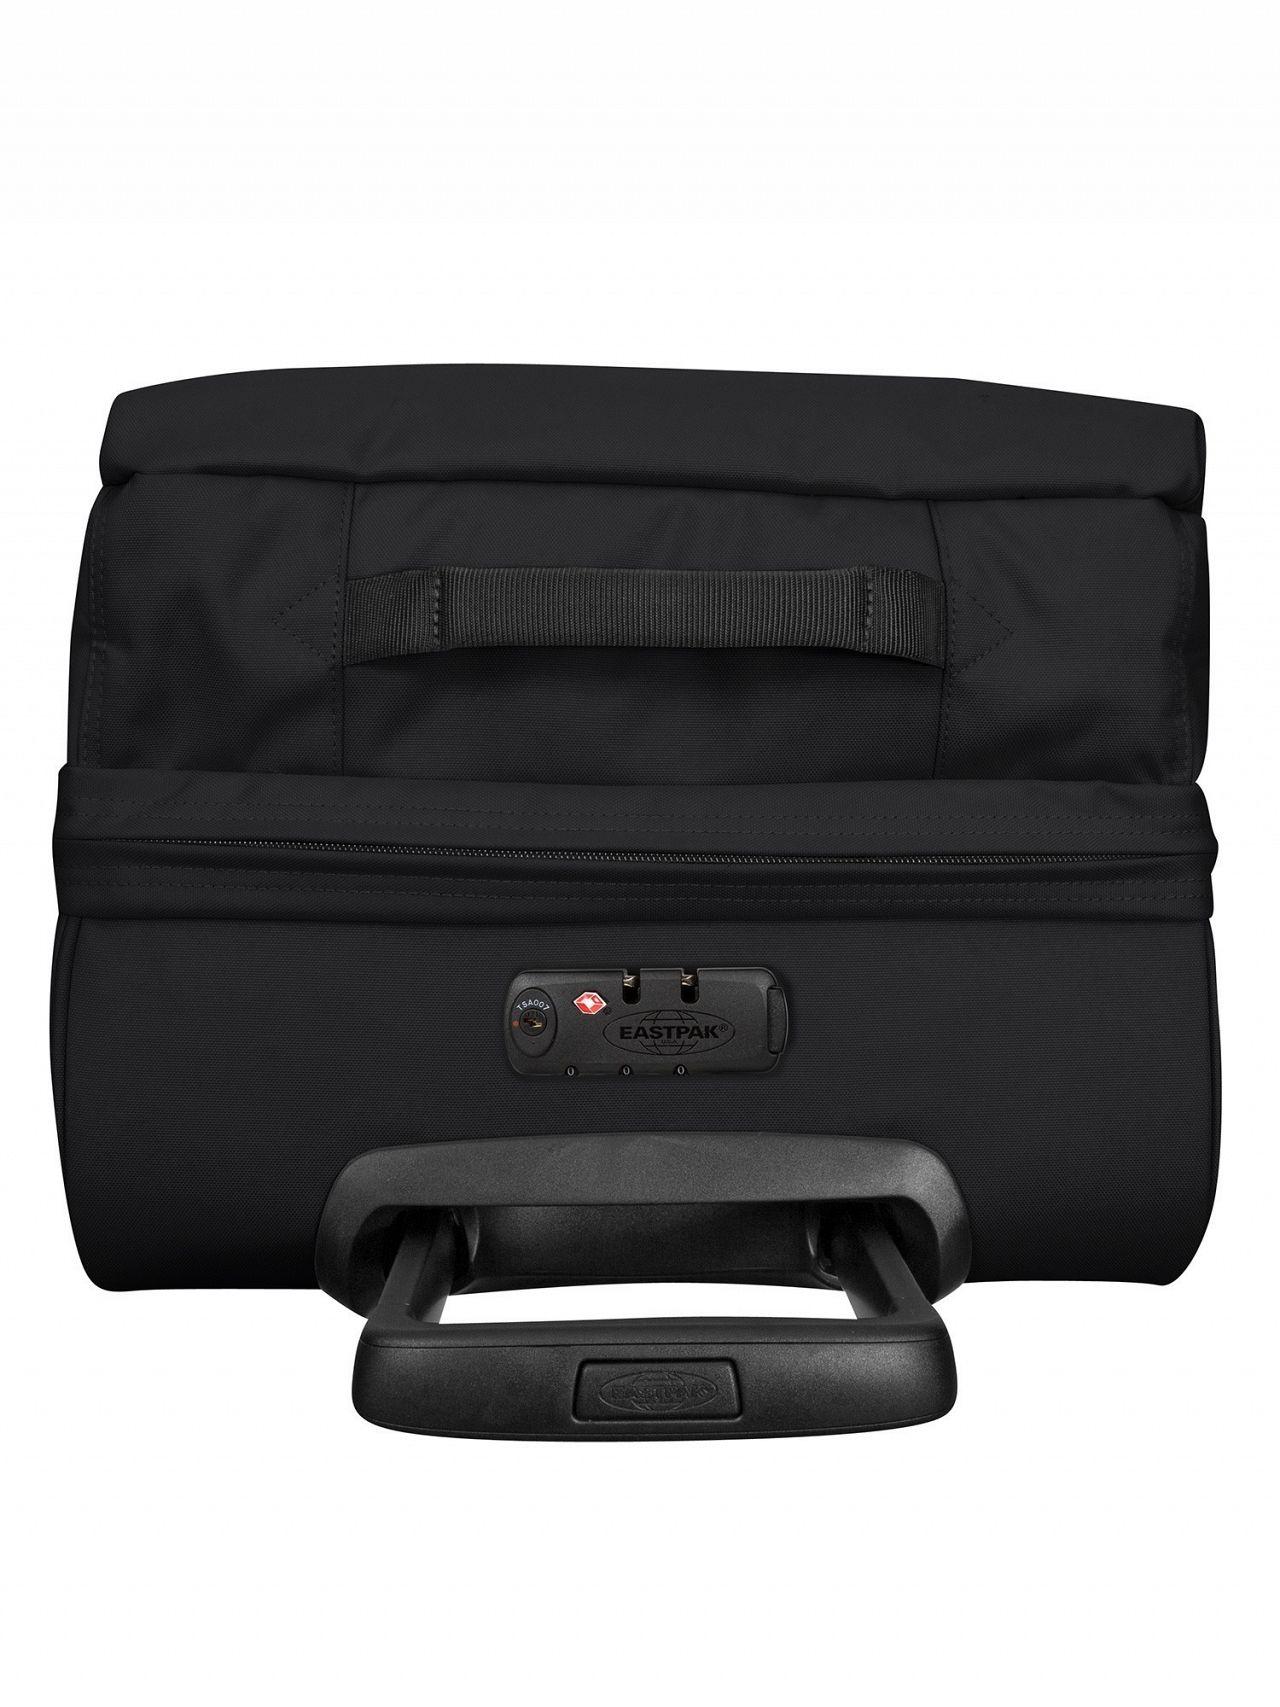 Eastpak Synthetic Blakout Tranverz S Cabin Luggage in Black for Men - Lyst